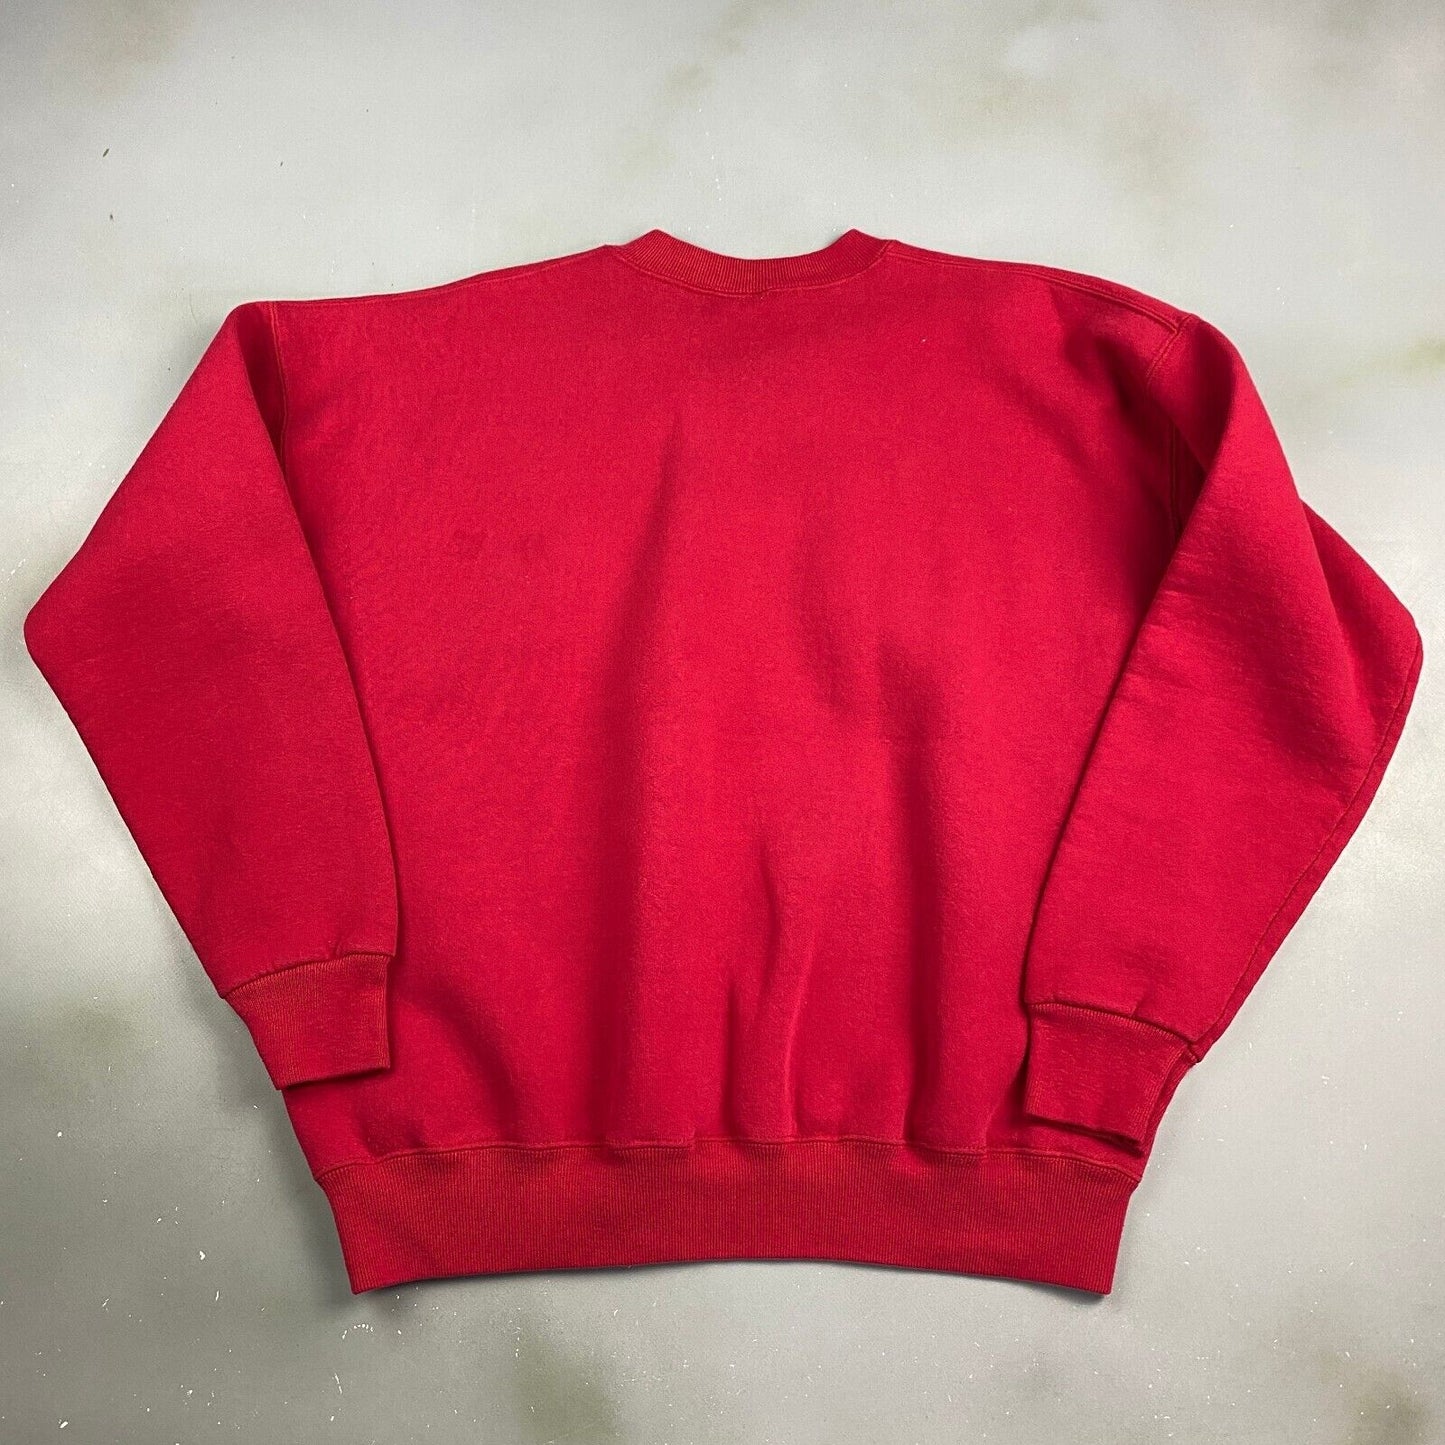 VINTAGE Blank Red Crewneck Sweater sz L-XL Mens Adult